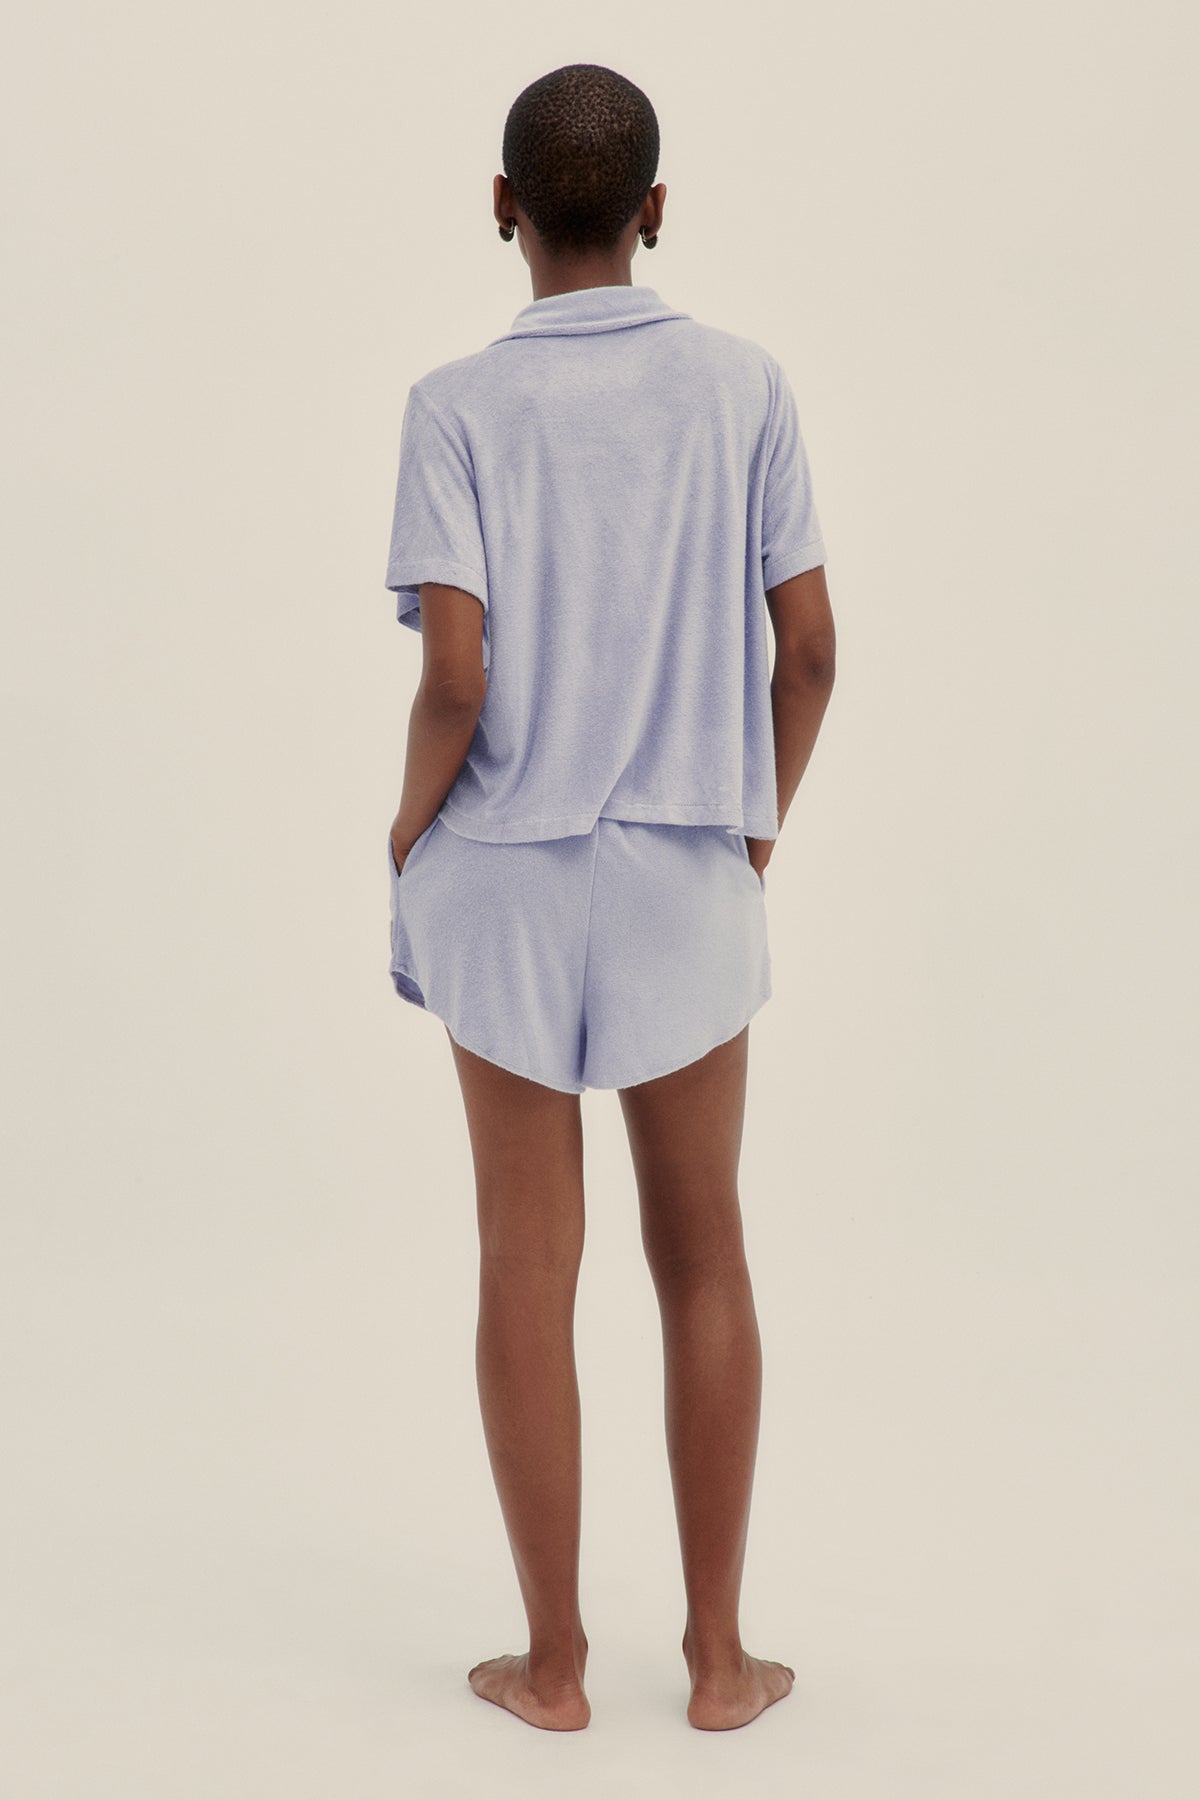 Lavender Towel Short Sleeve Shirt - Polonio